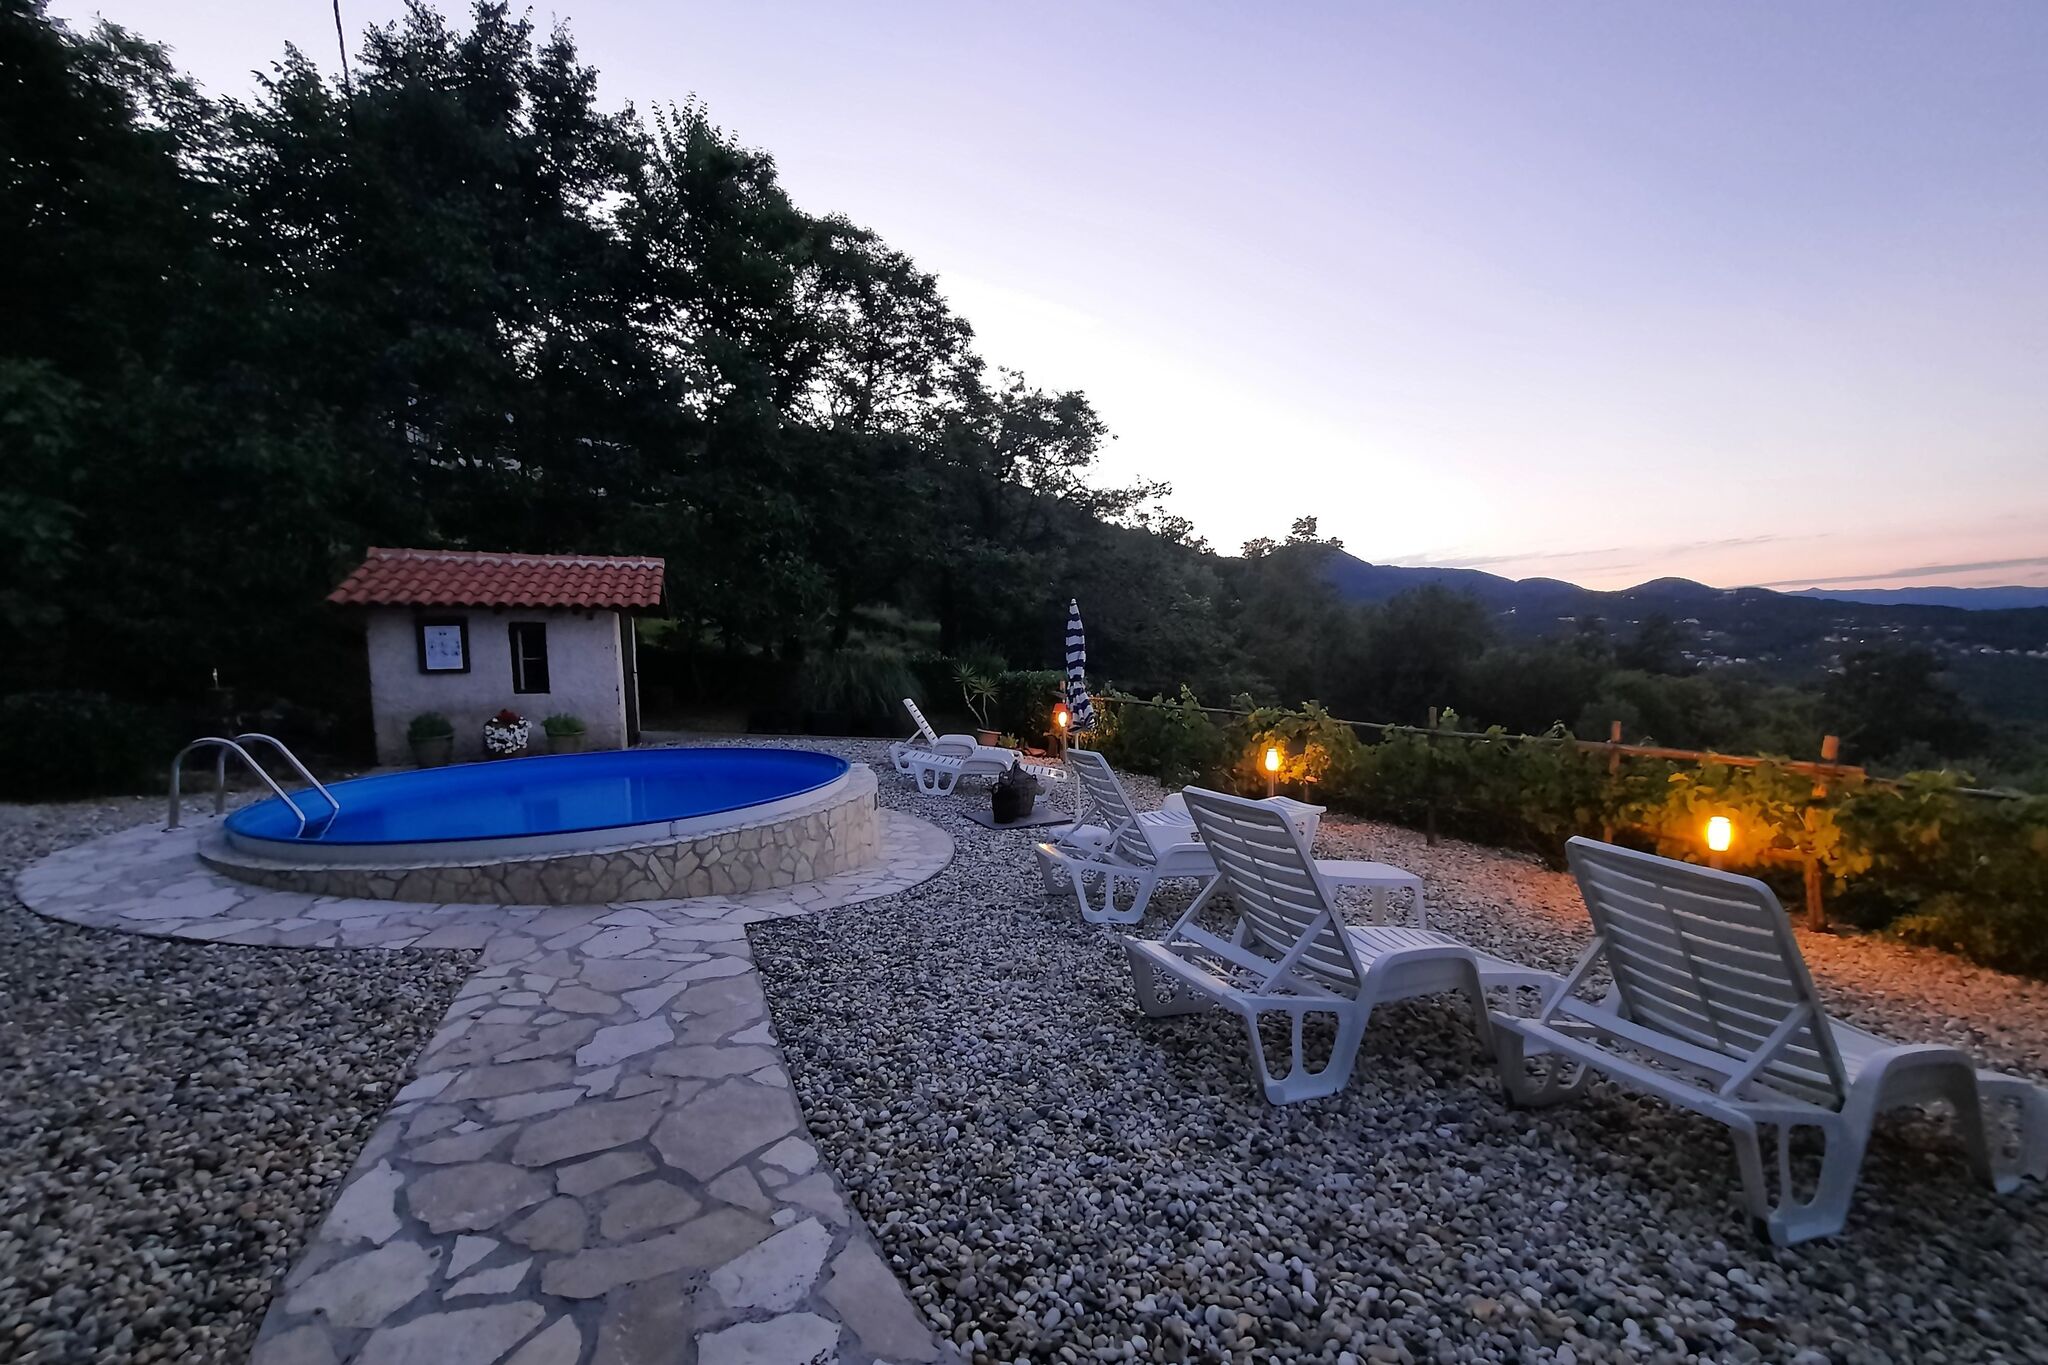 Holiday home Mirjana in Lovran -Dobrec with swimming pool